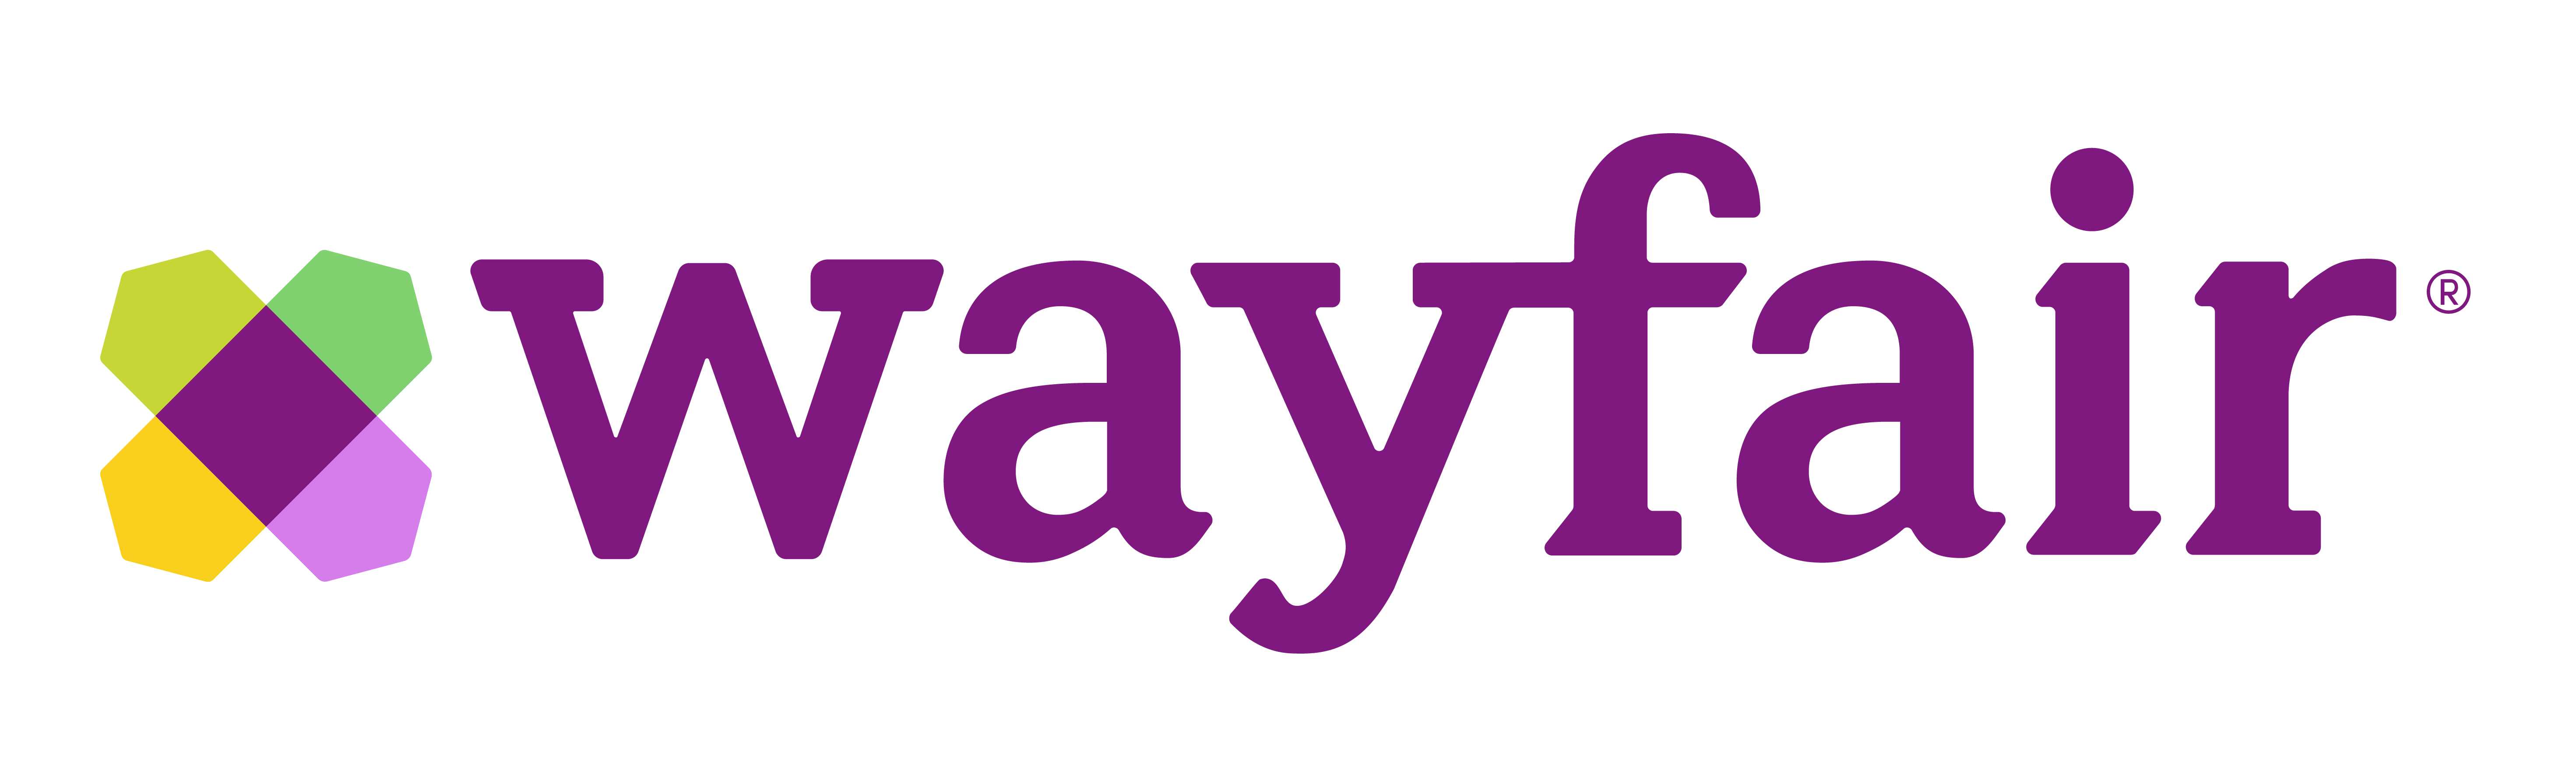 Wayfair Company Logo